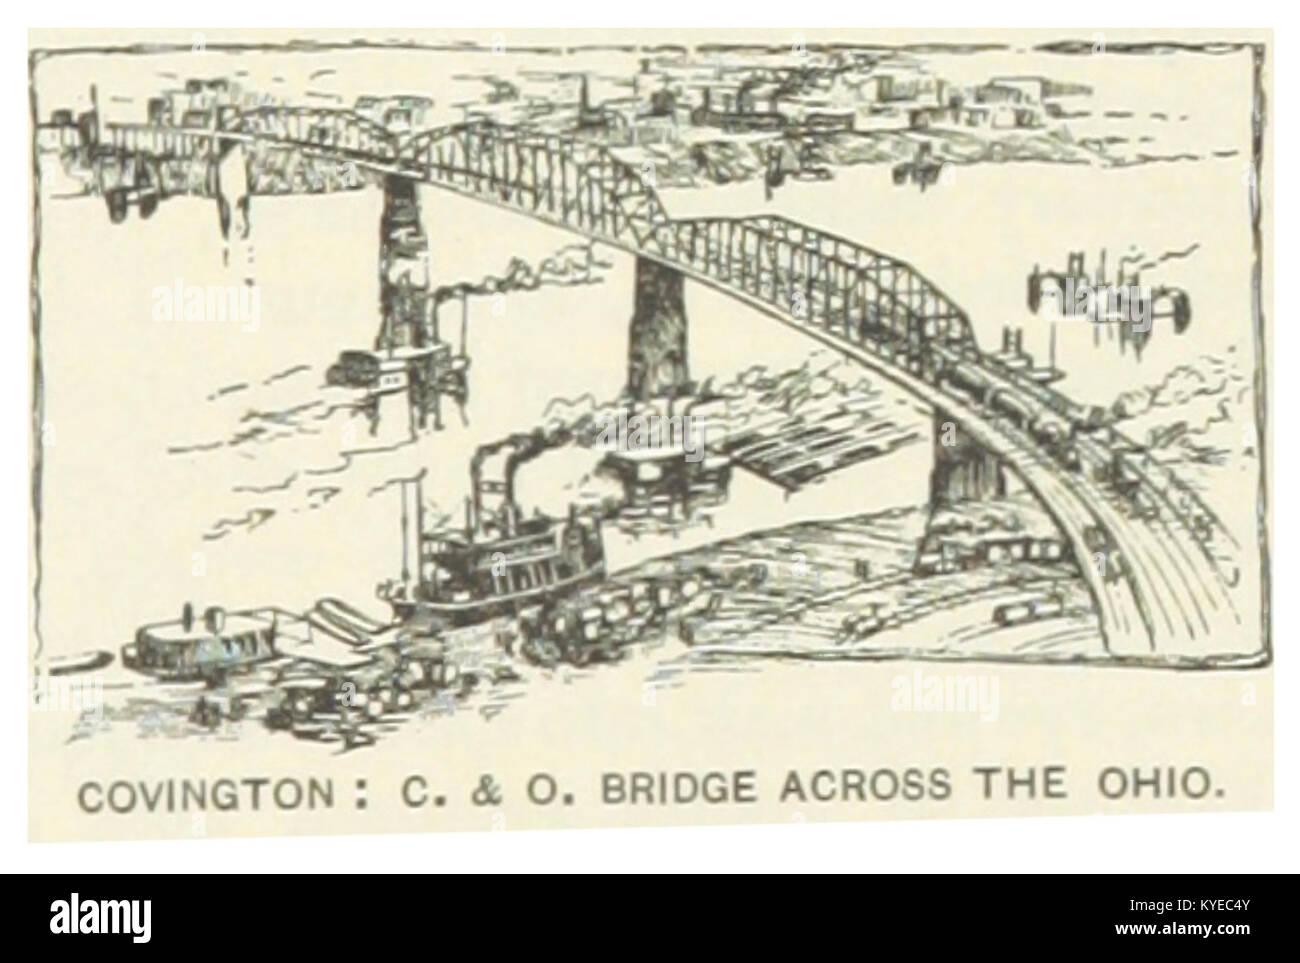 US-KY(1891) p293 COVINGTON, C. & O. BRIDGE ACROSS THE OHIO Stock Photo